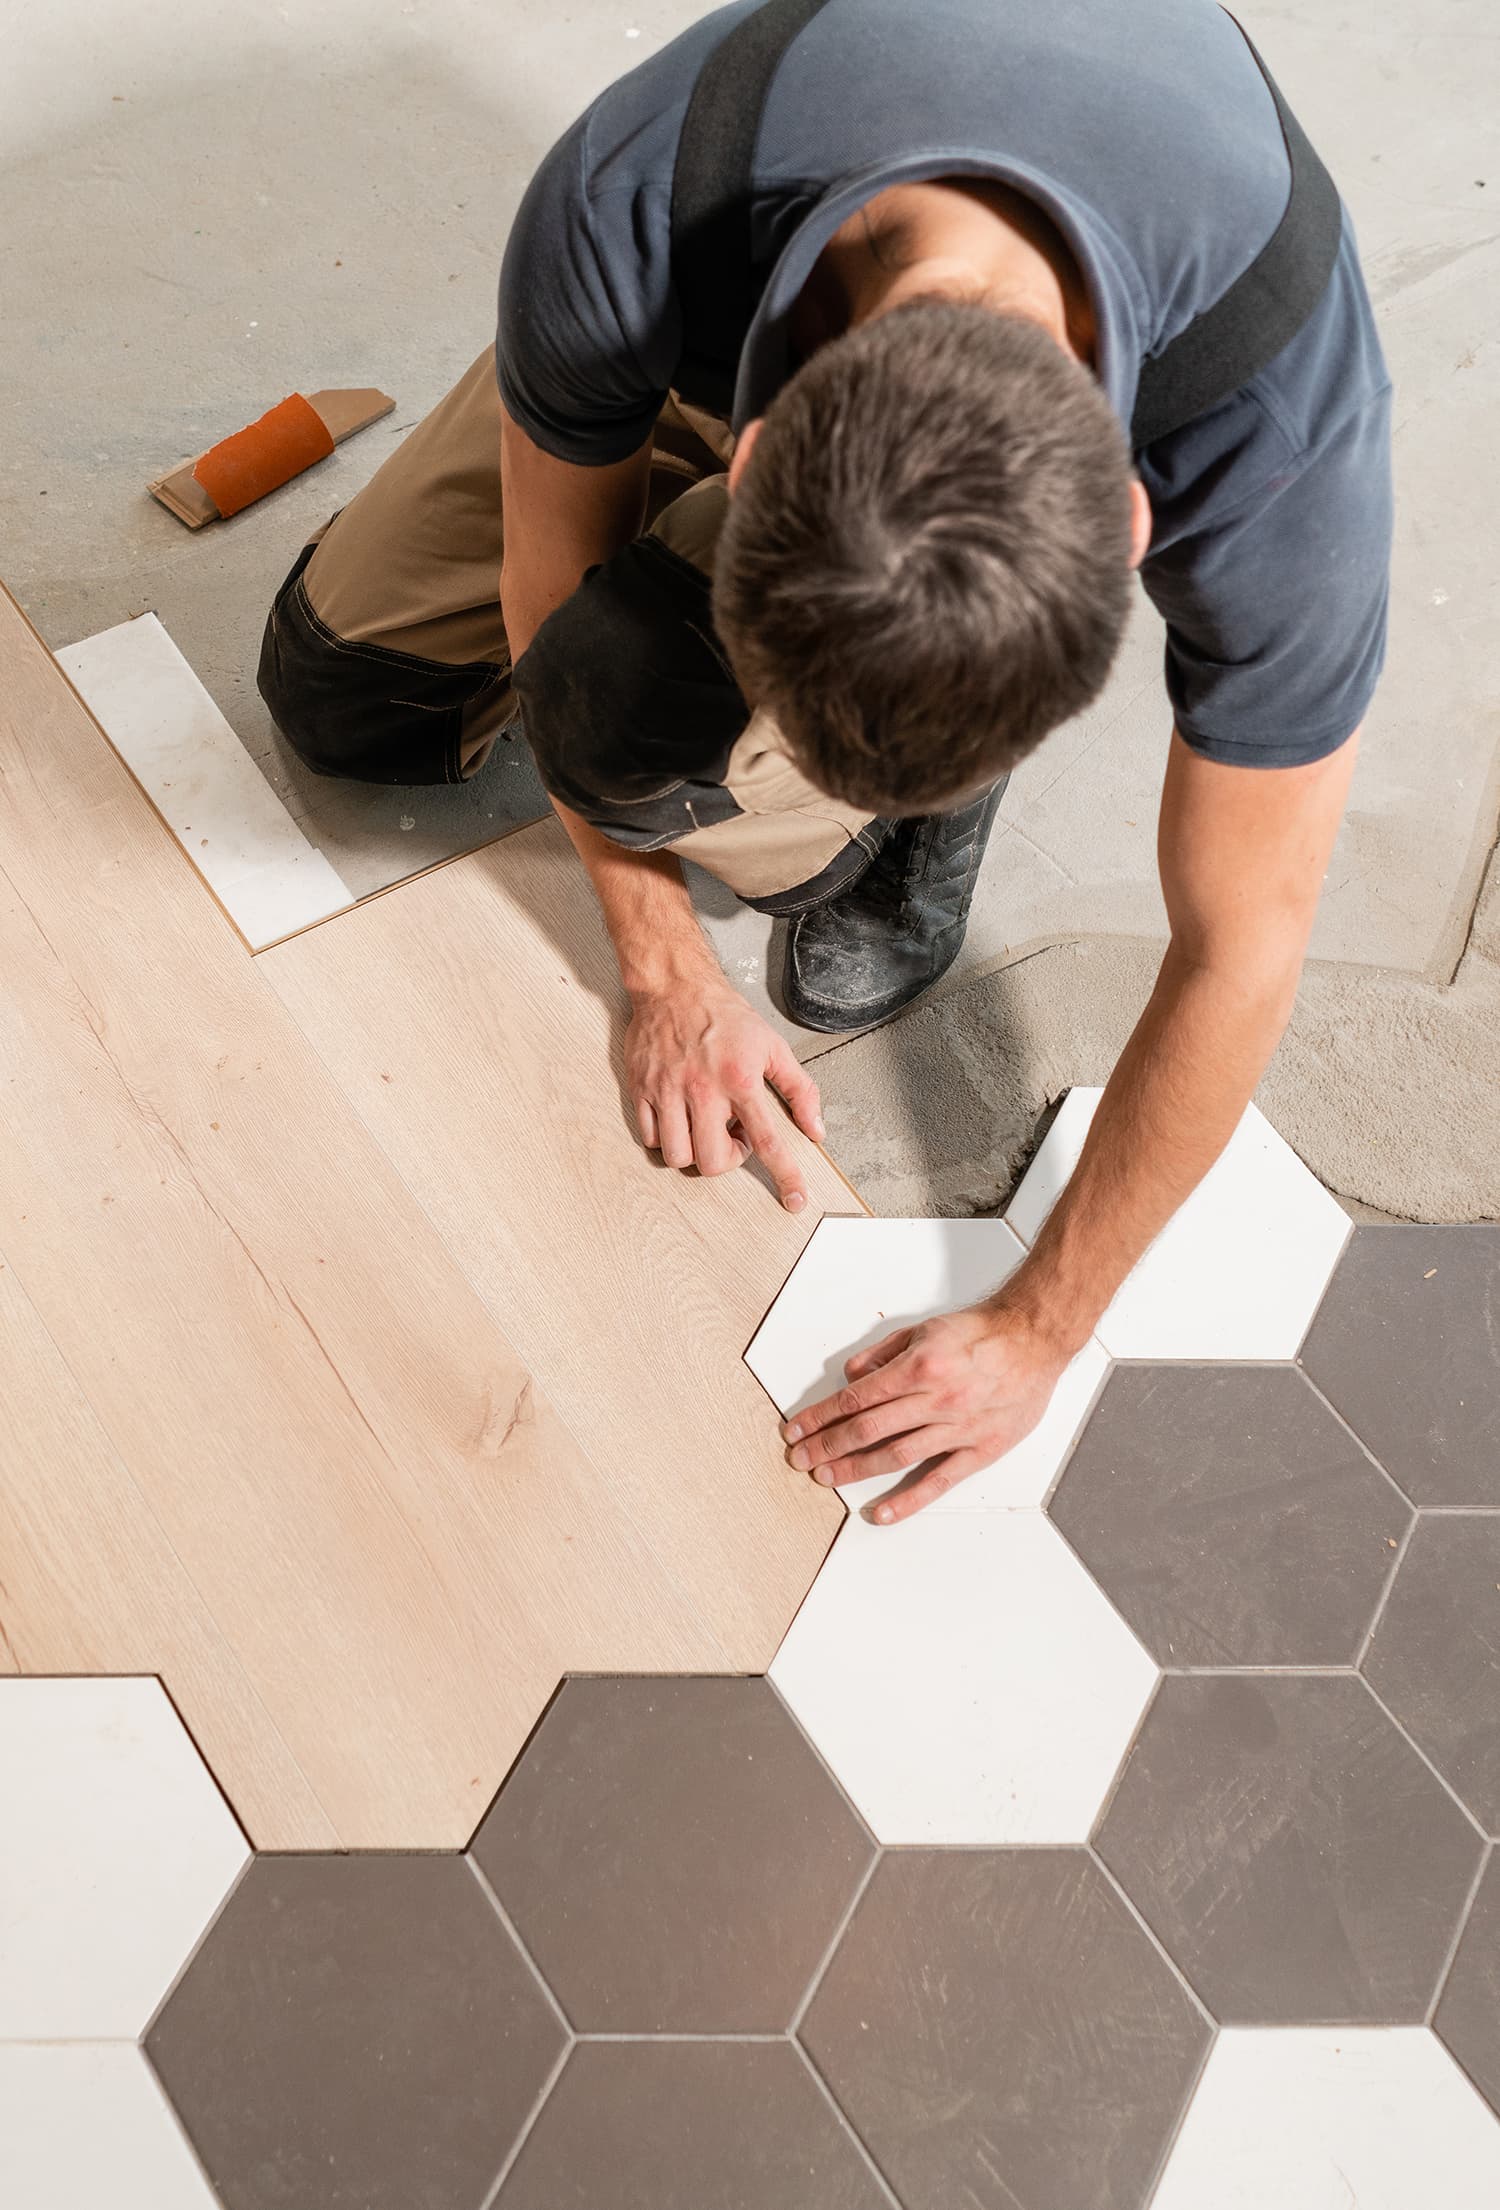 Male worker installing new wooden laminate flooring